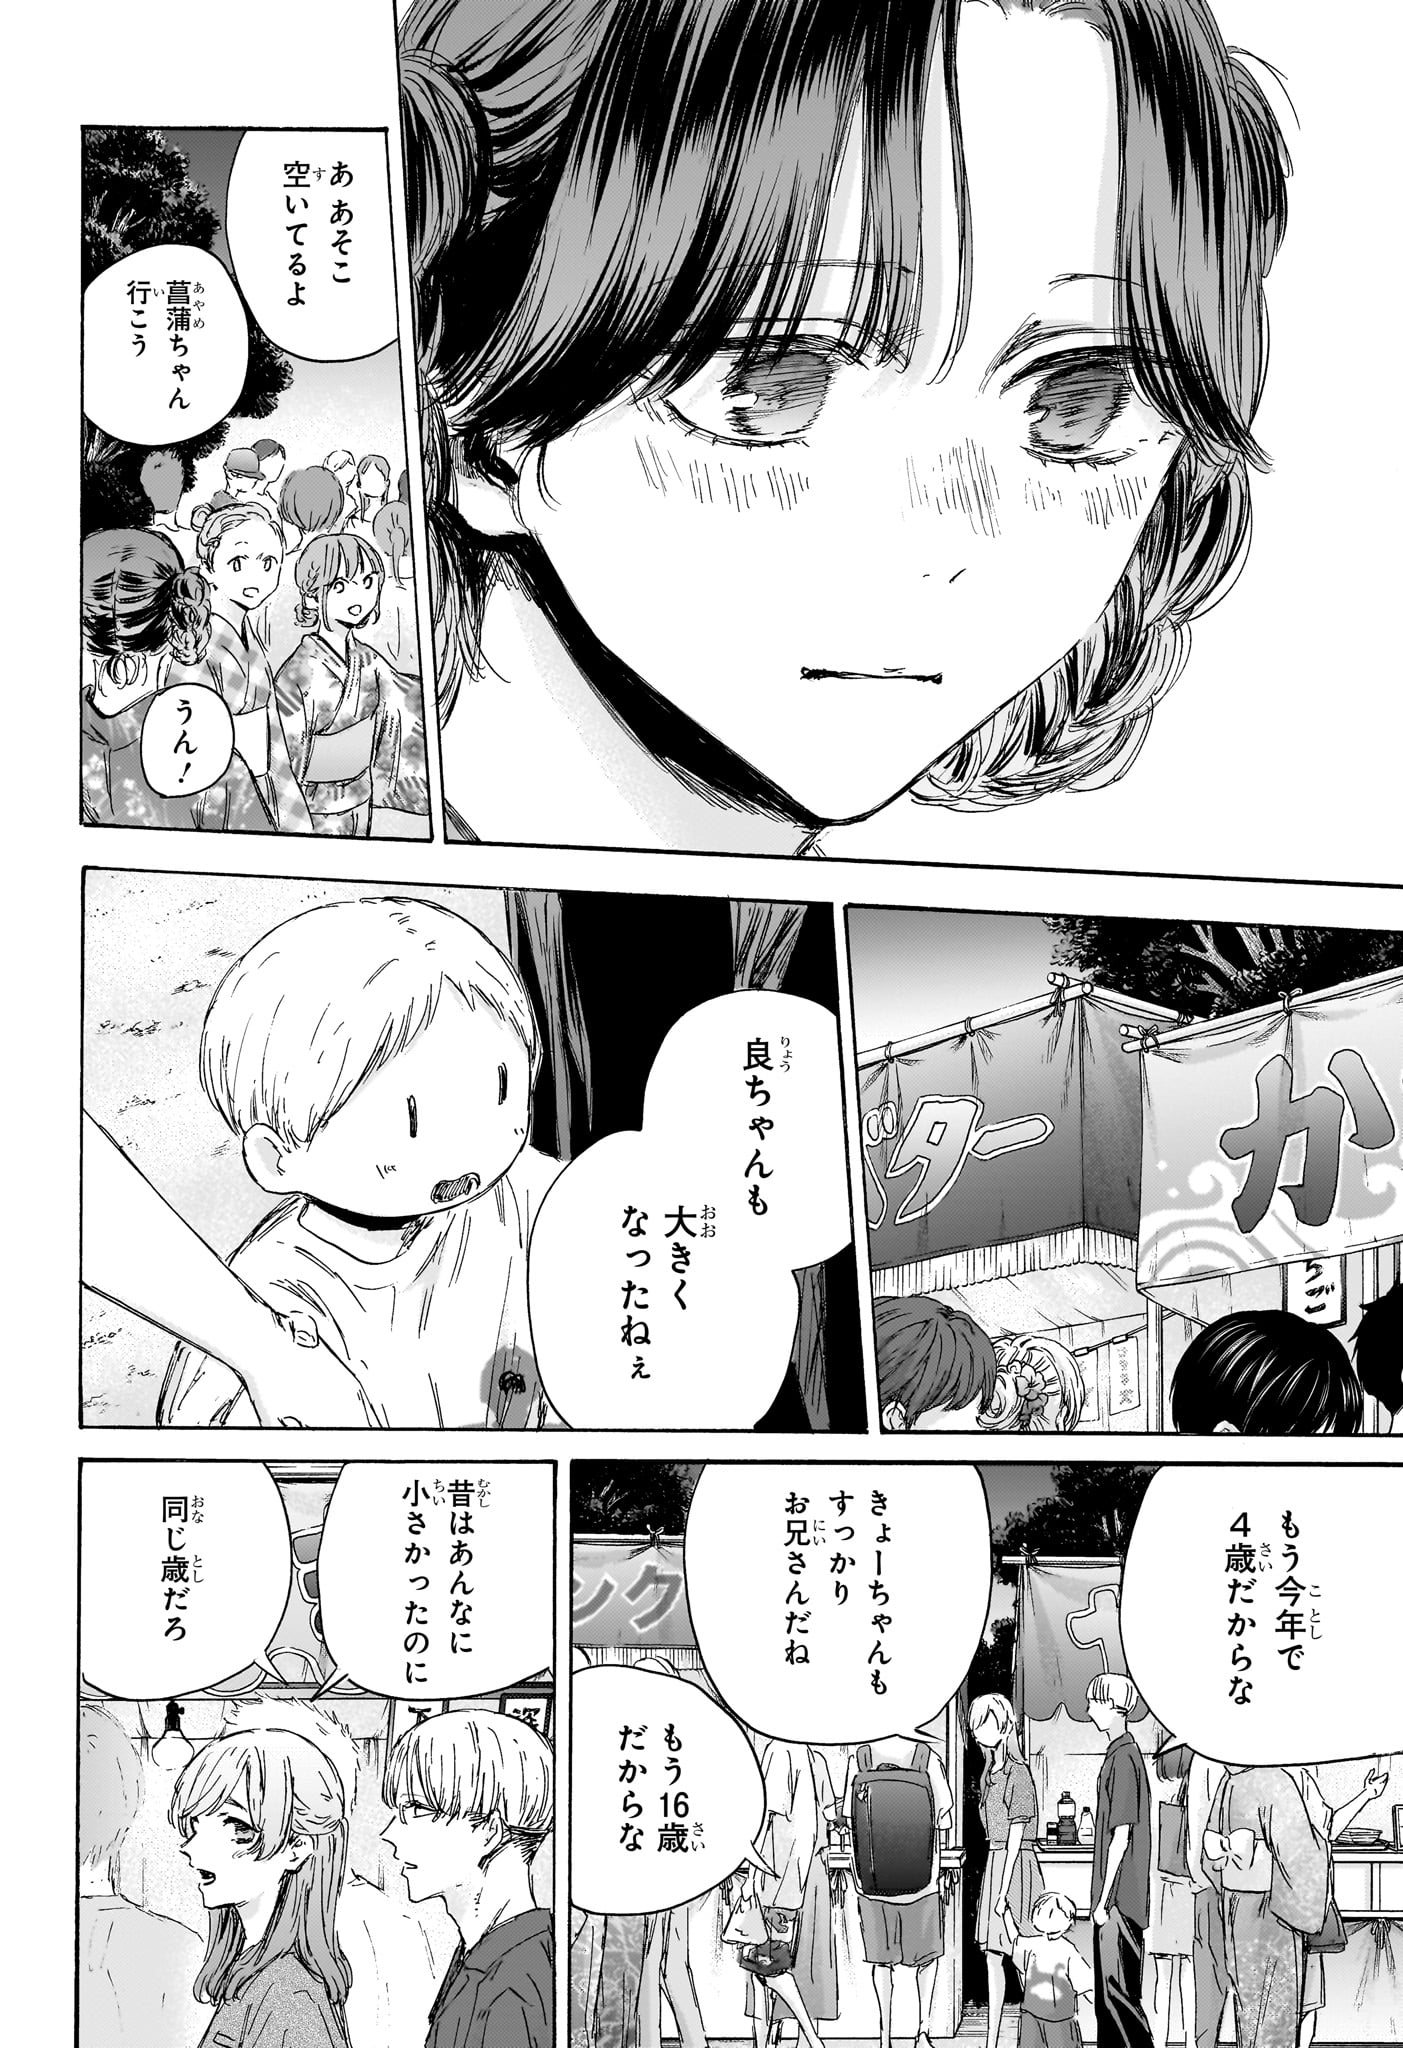 Ao no Hako - Chapter 148 - Page 6